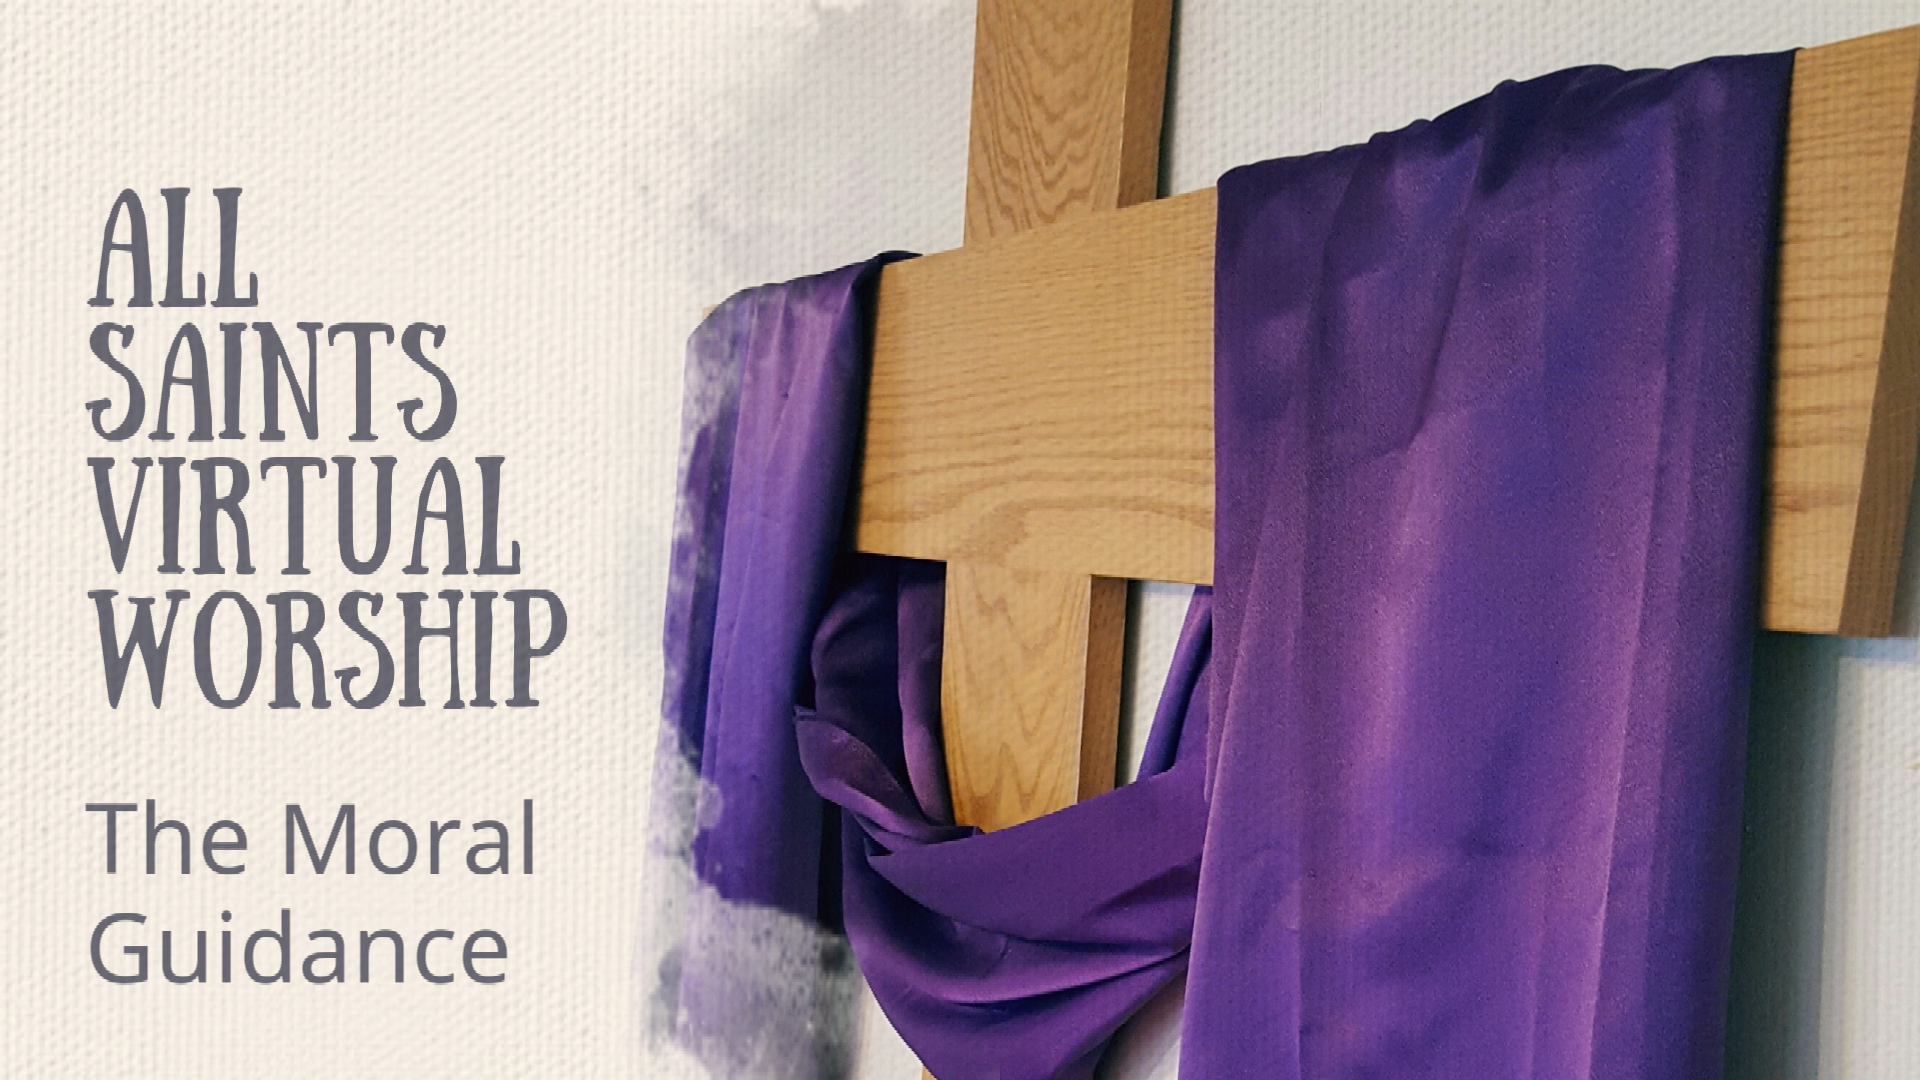 All Saints Virtual Worship - The Moral Guidance